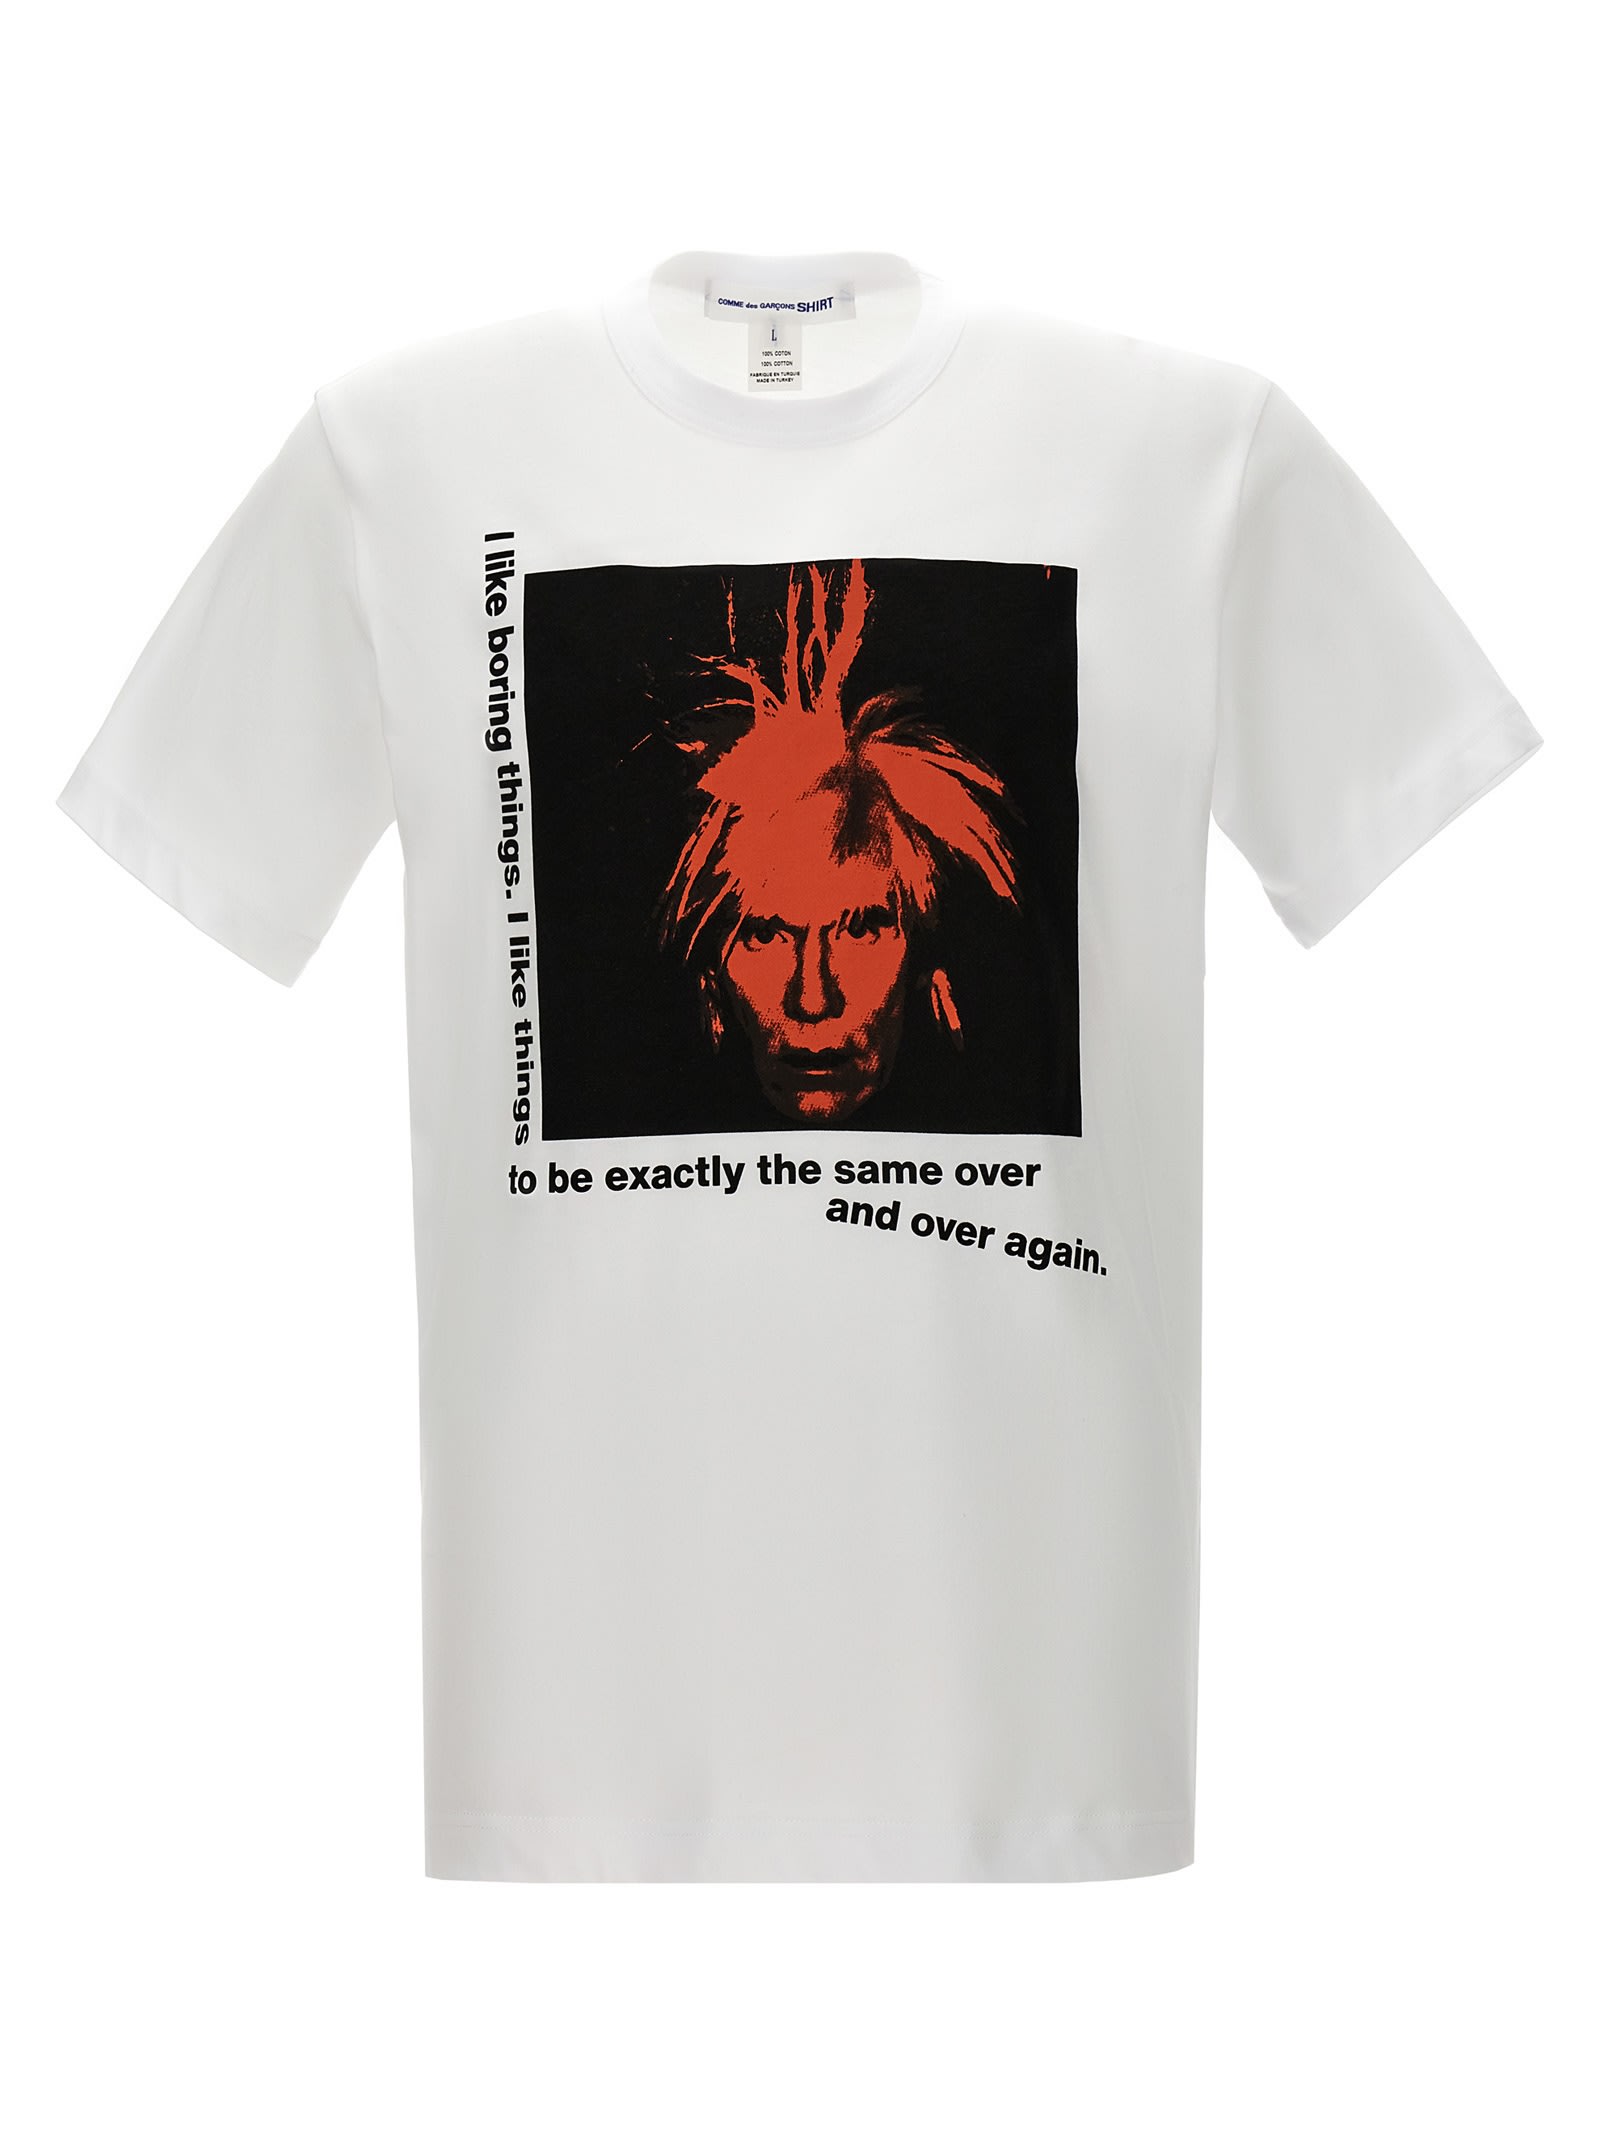 andy Warhol T-shirt